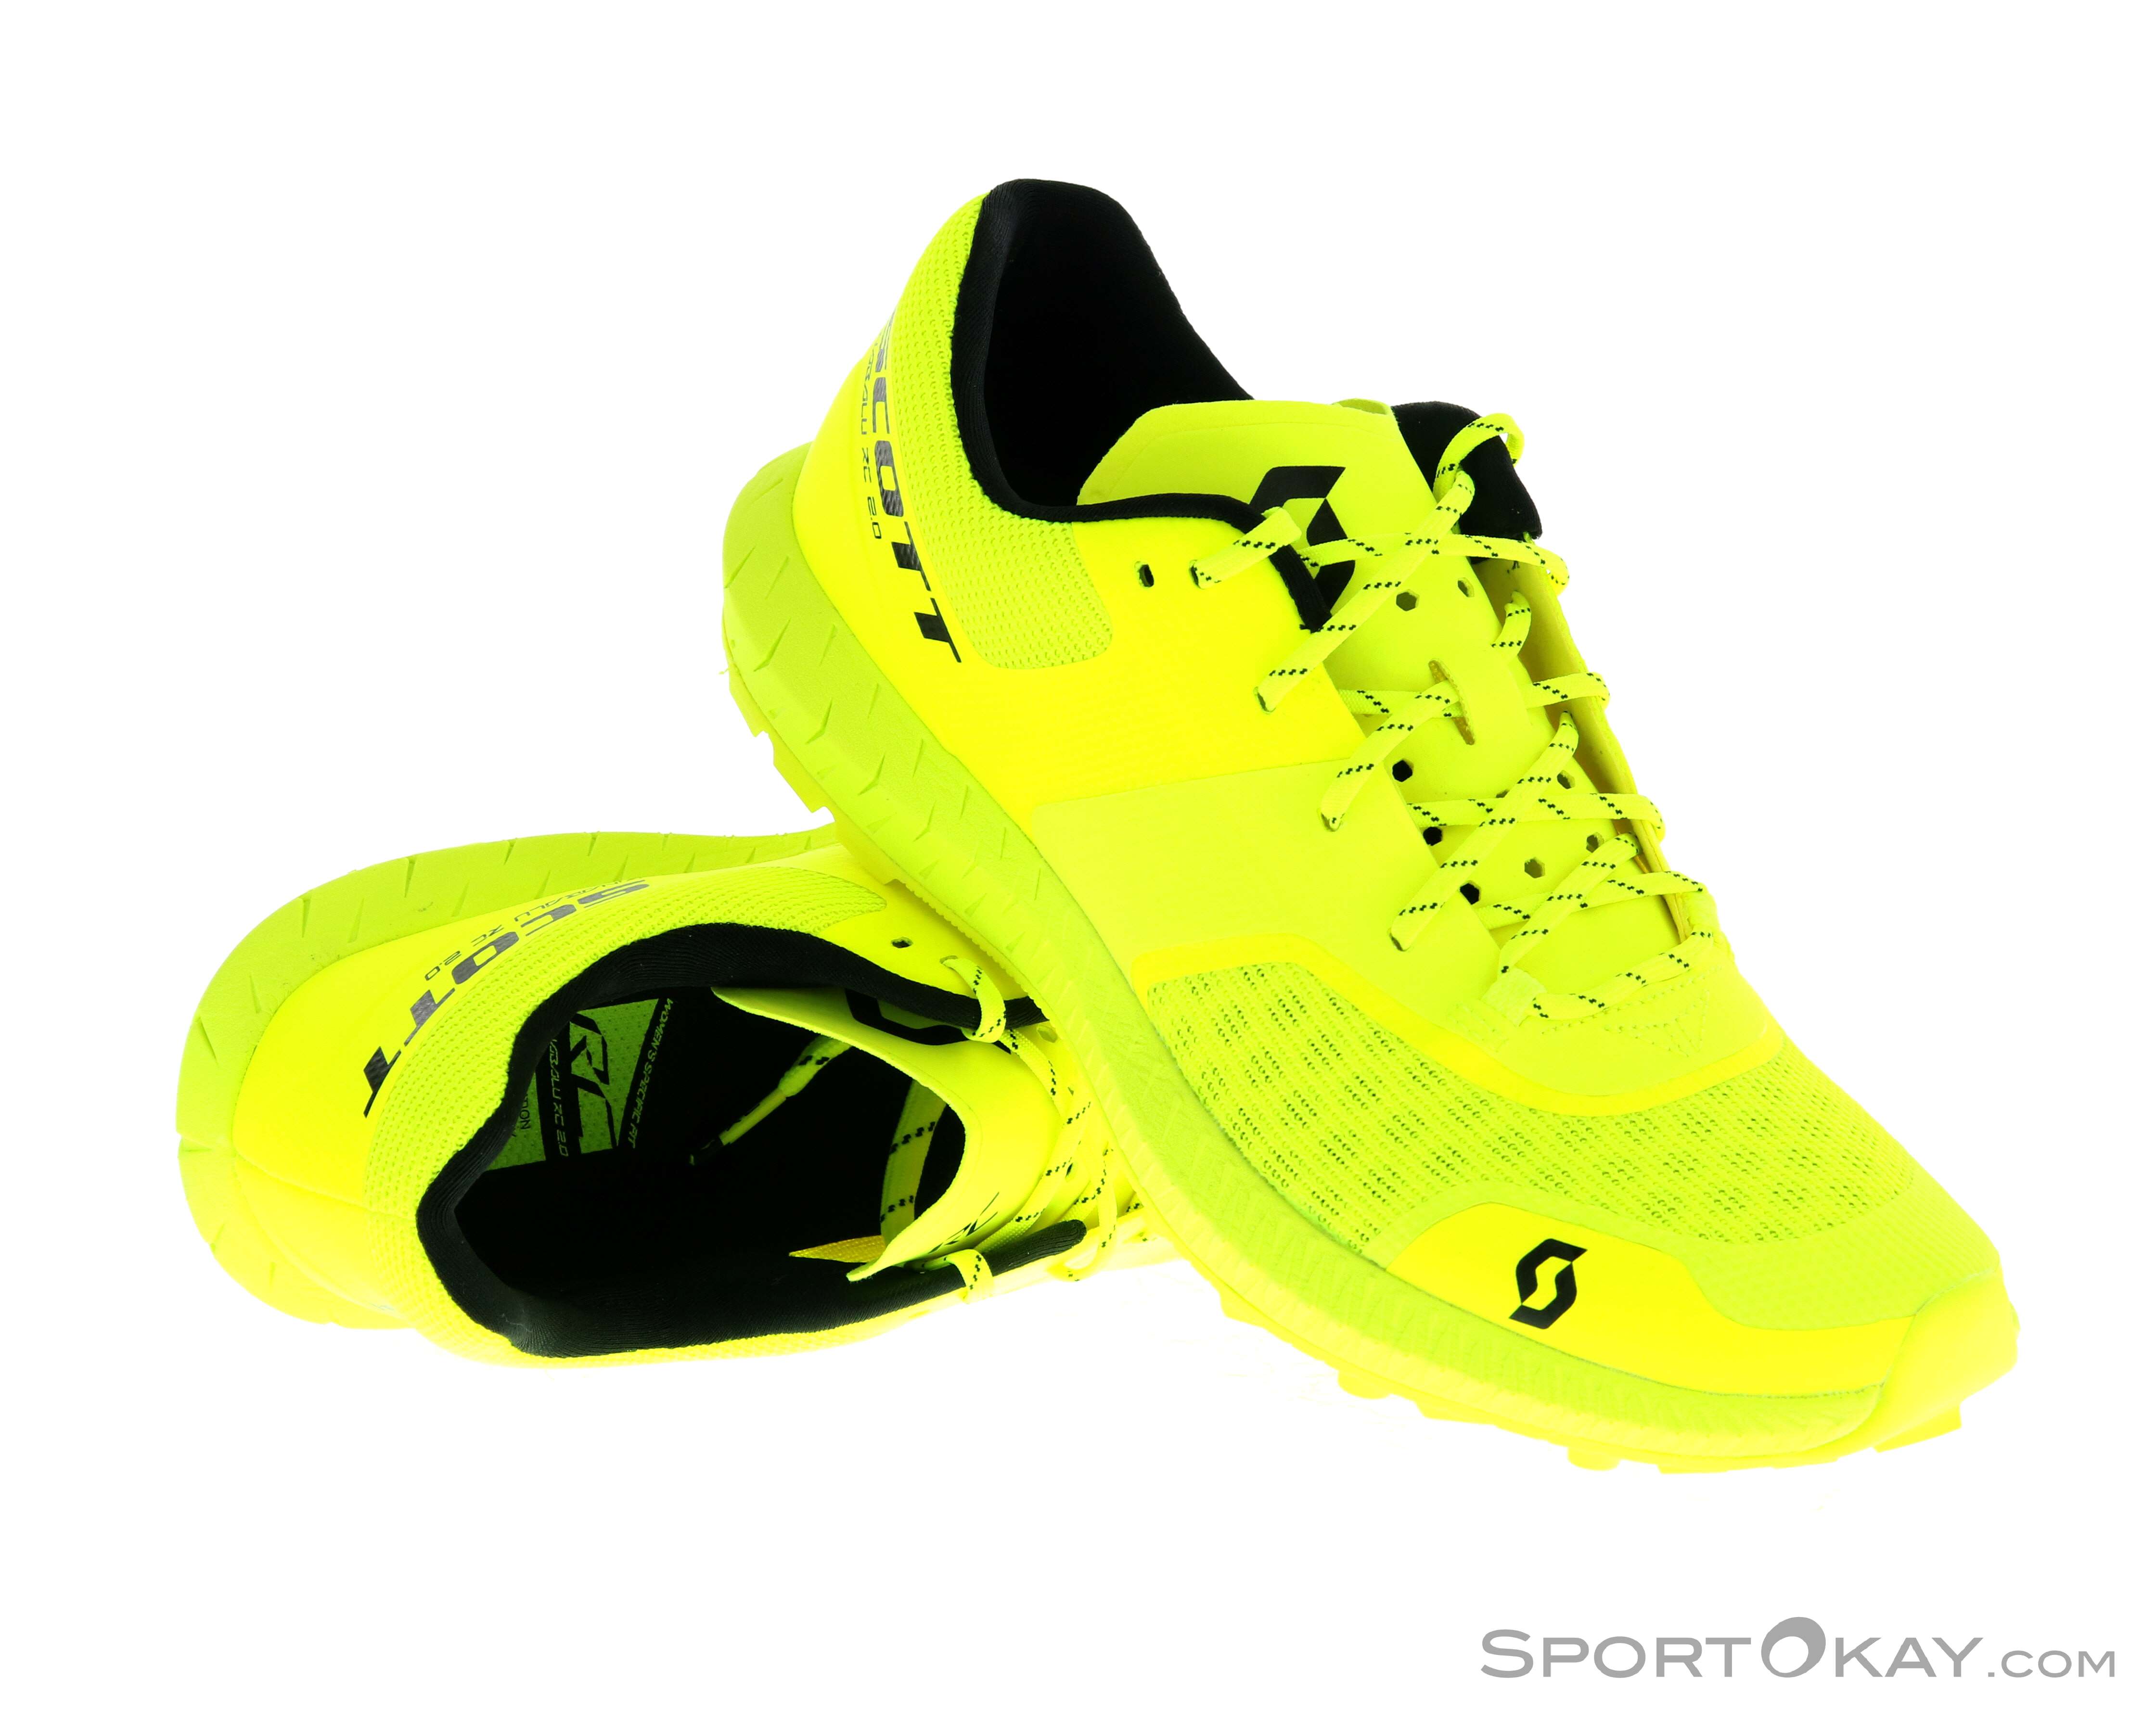 Scott Sports Kinabalu Rc Footwear Trail Running Shoes Black Yellow All Sizes 